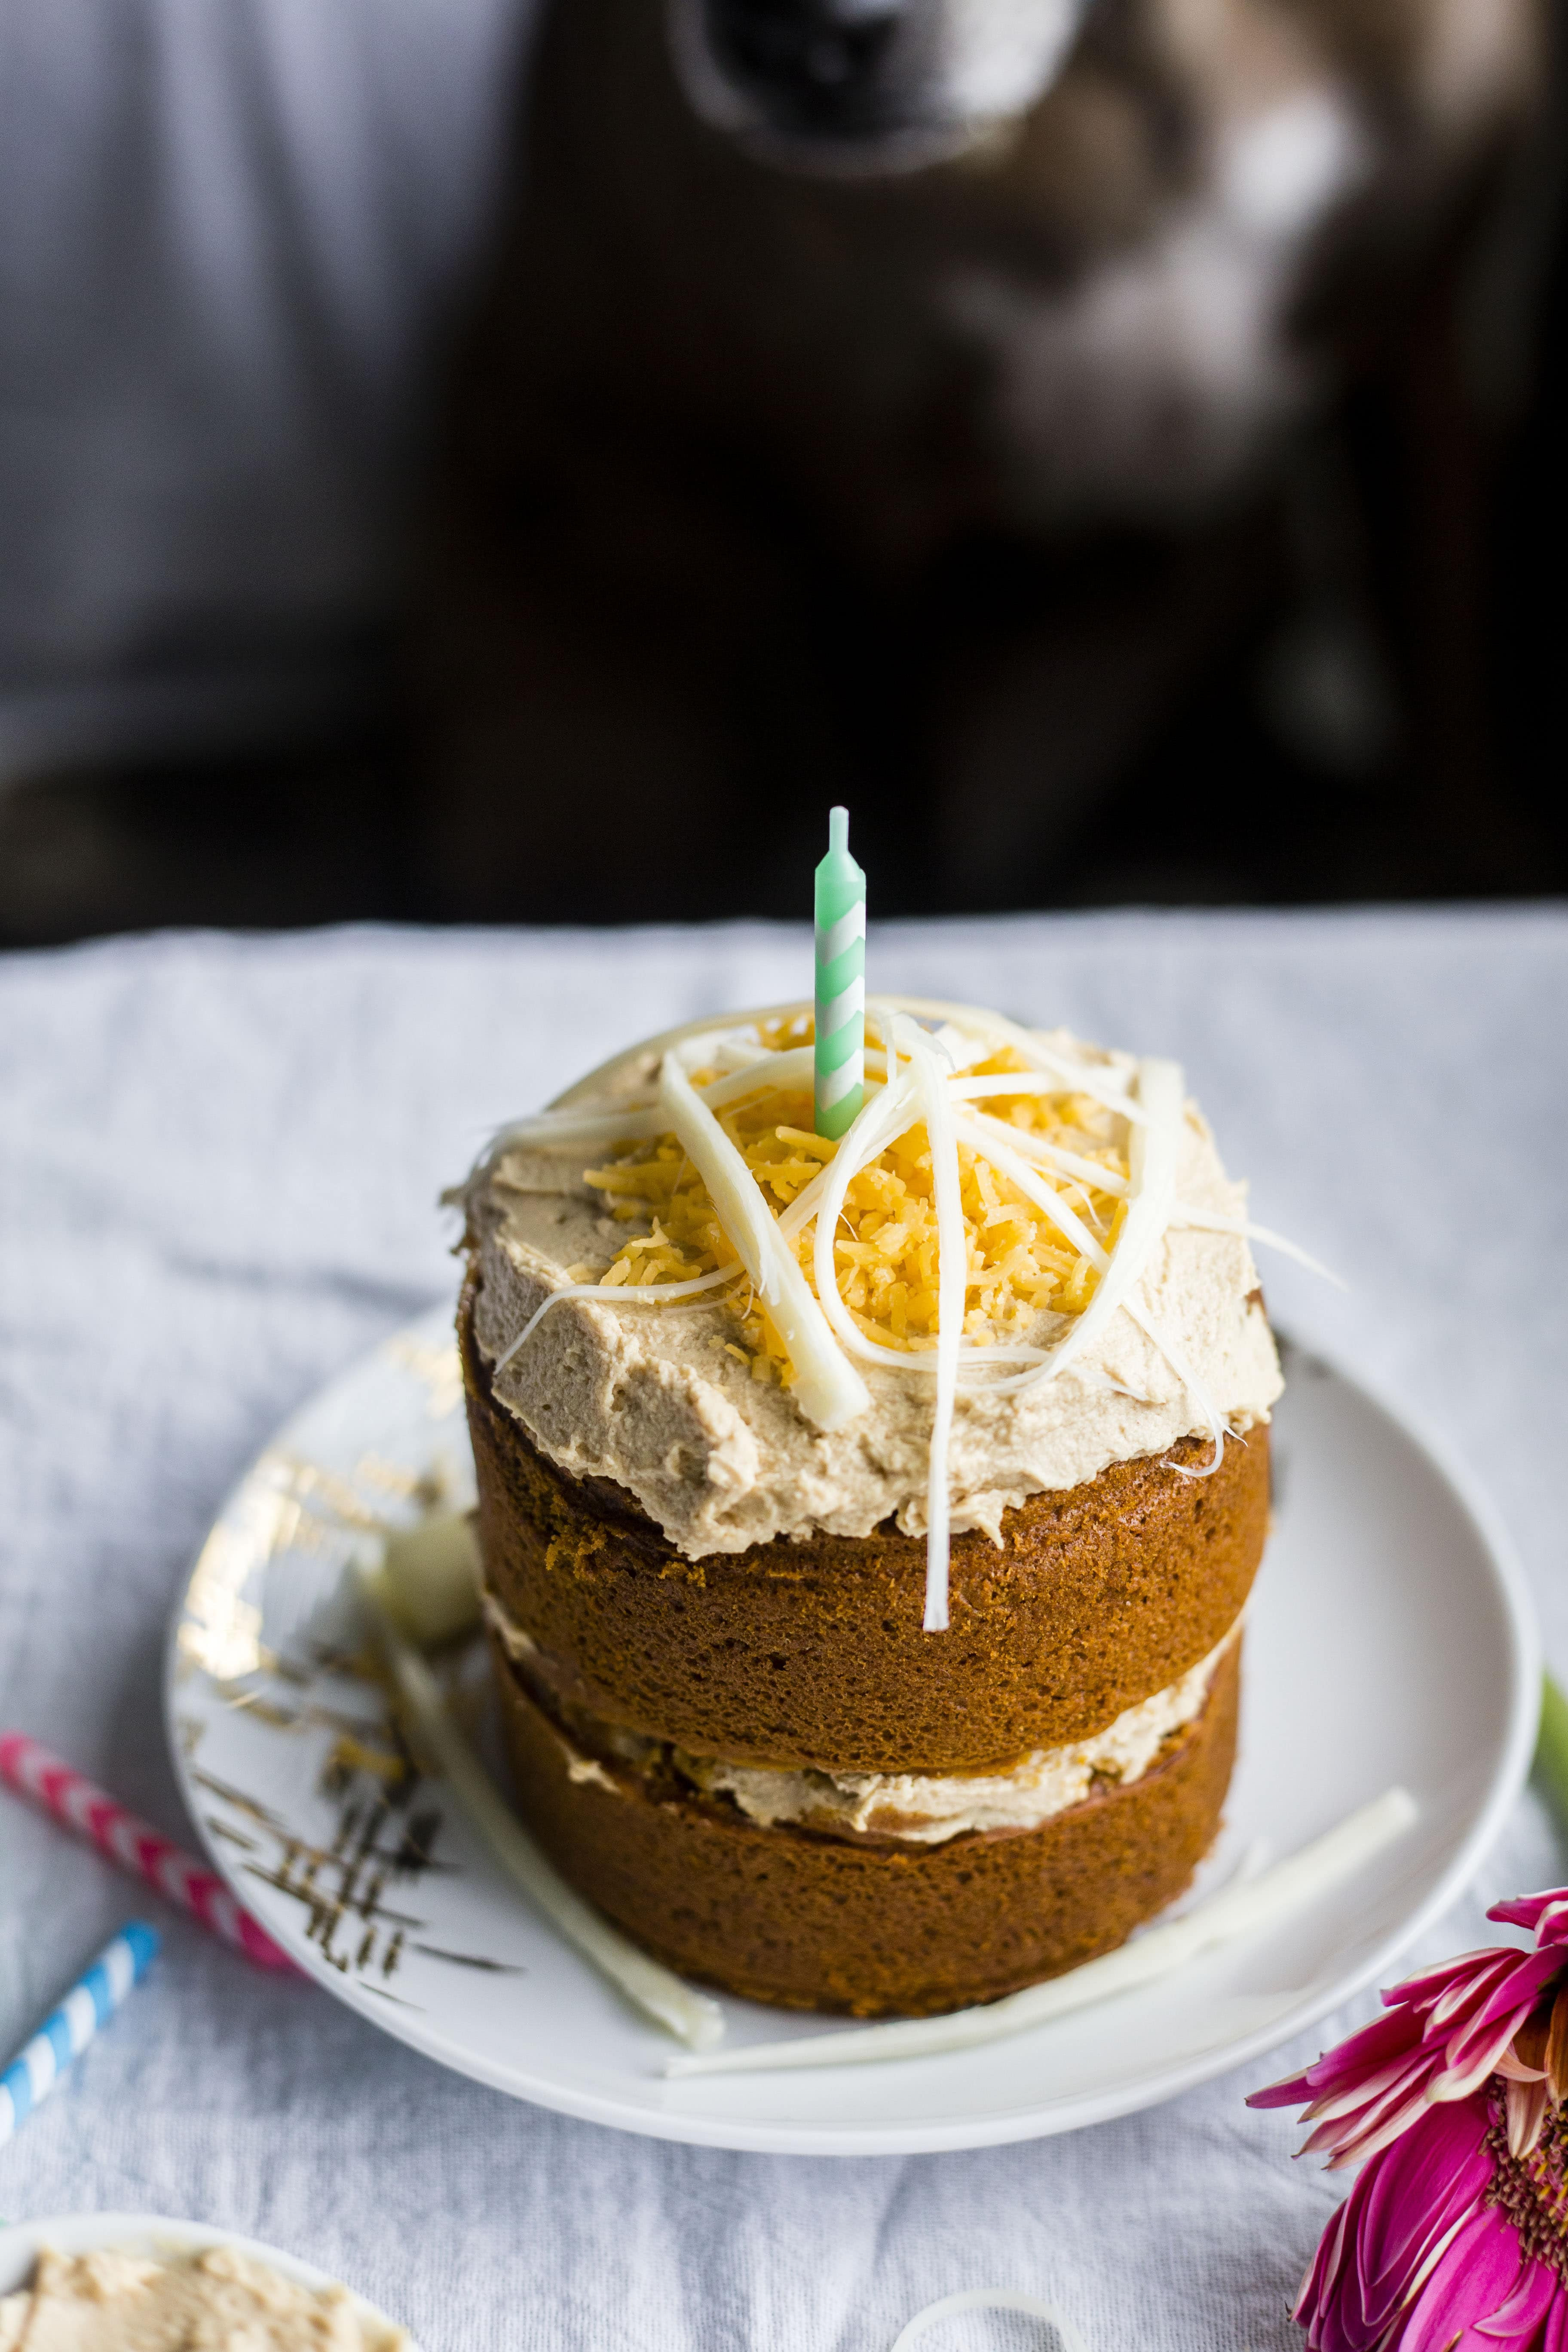 Best ideas about Doggie Birthday Cake
. Save or Pin Mini Dog Birthday Cake Now.